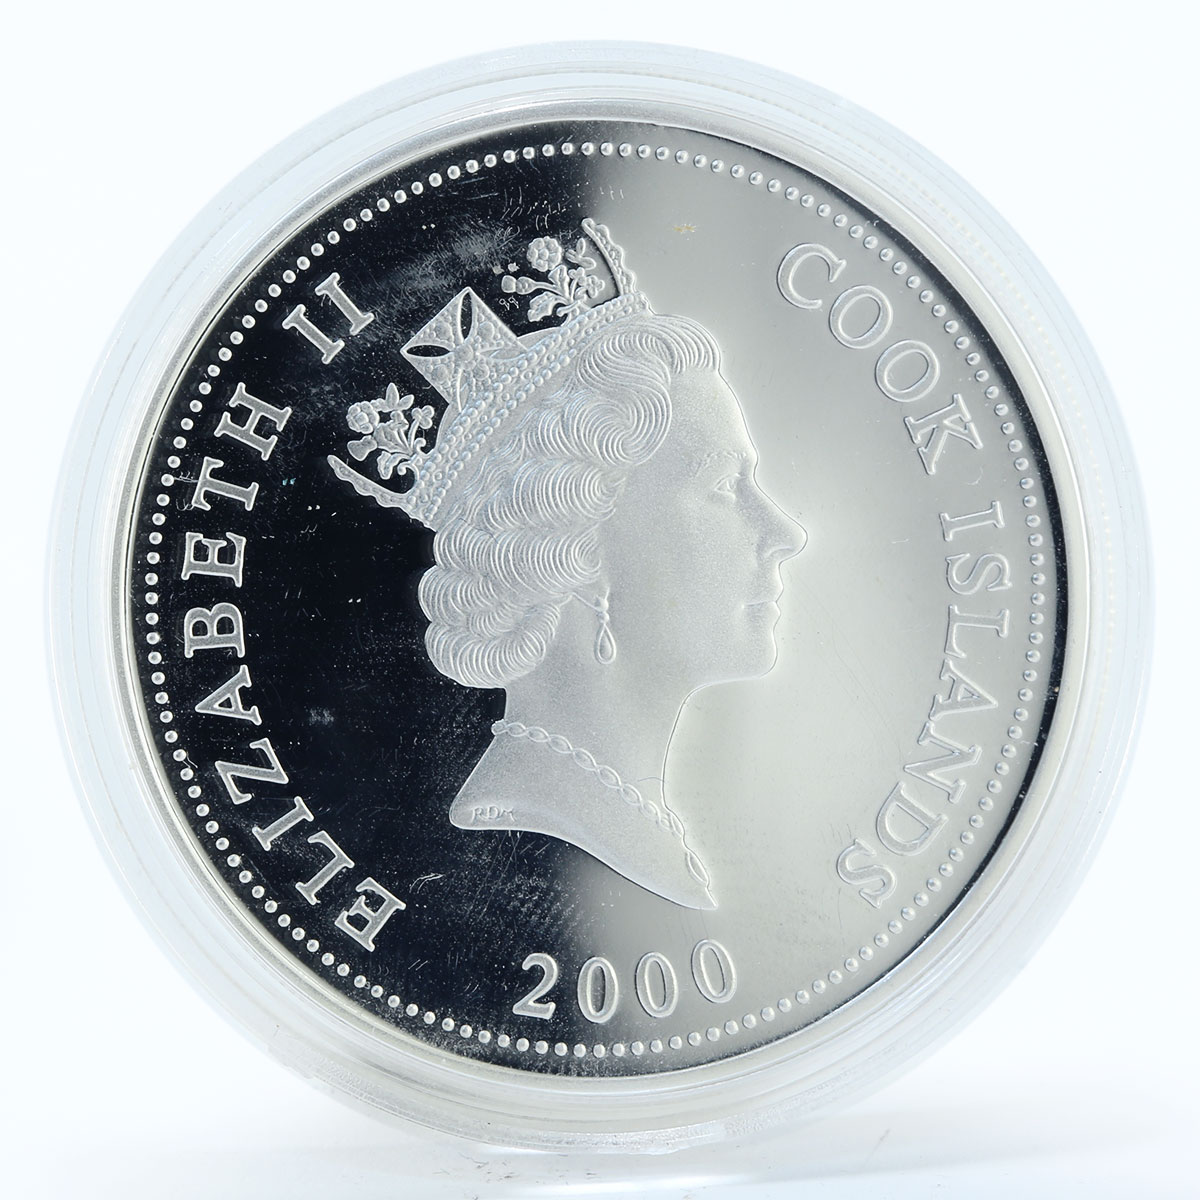 Cook Islands 1 dollar Rainforest Damselfly proof silver coin 2000